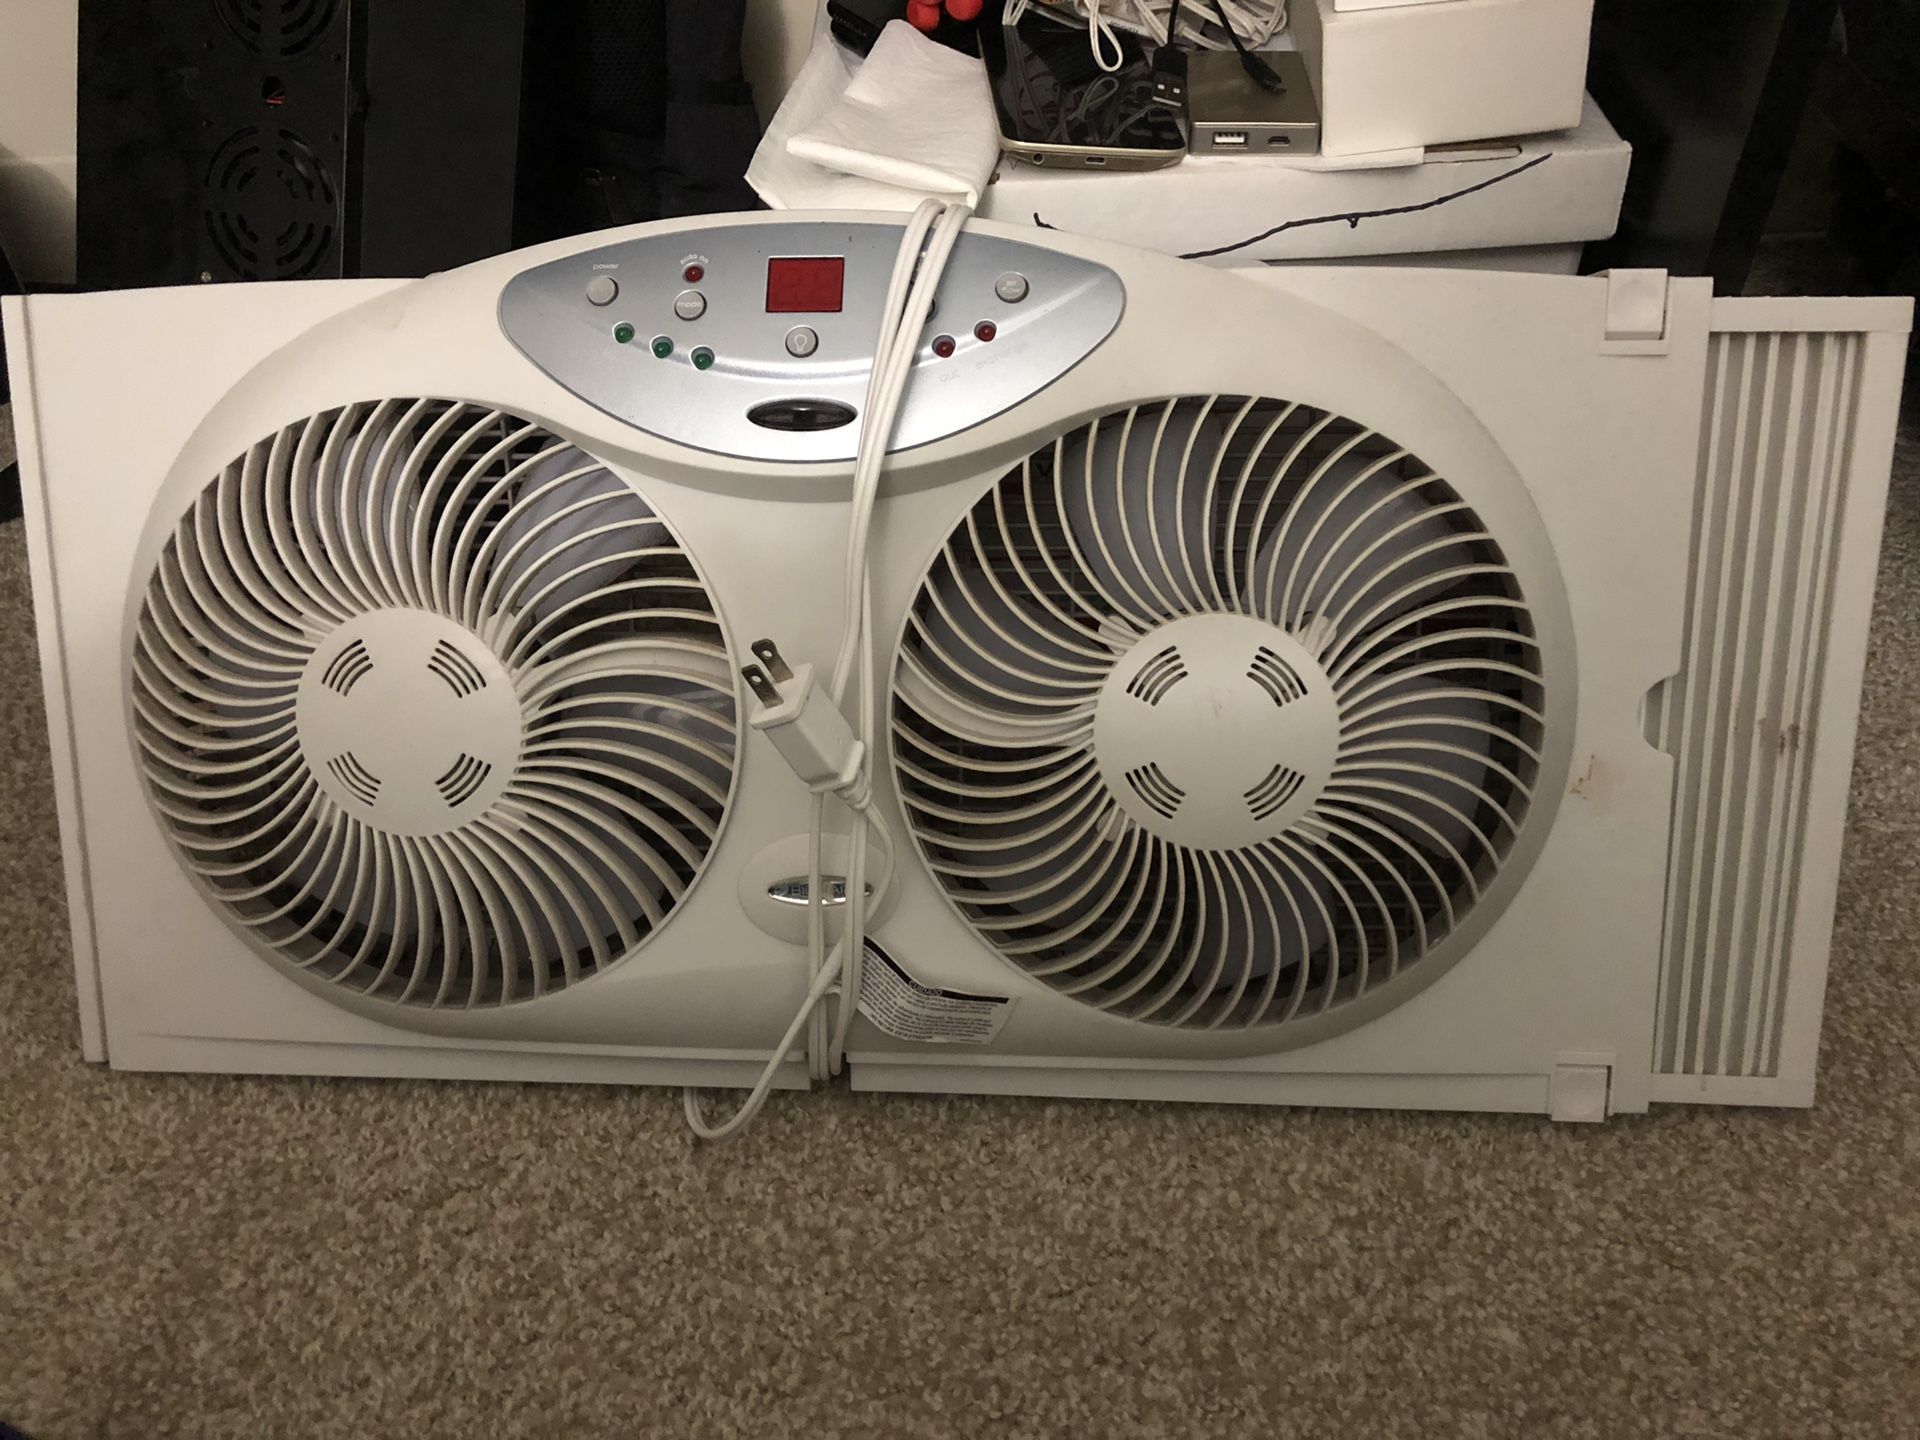 Bionair window fan with reversible airflow.